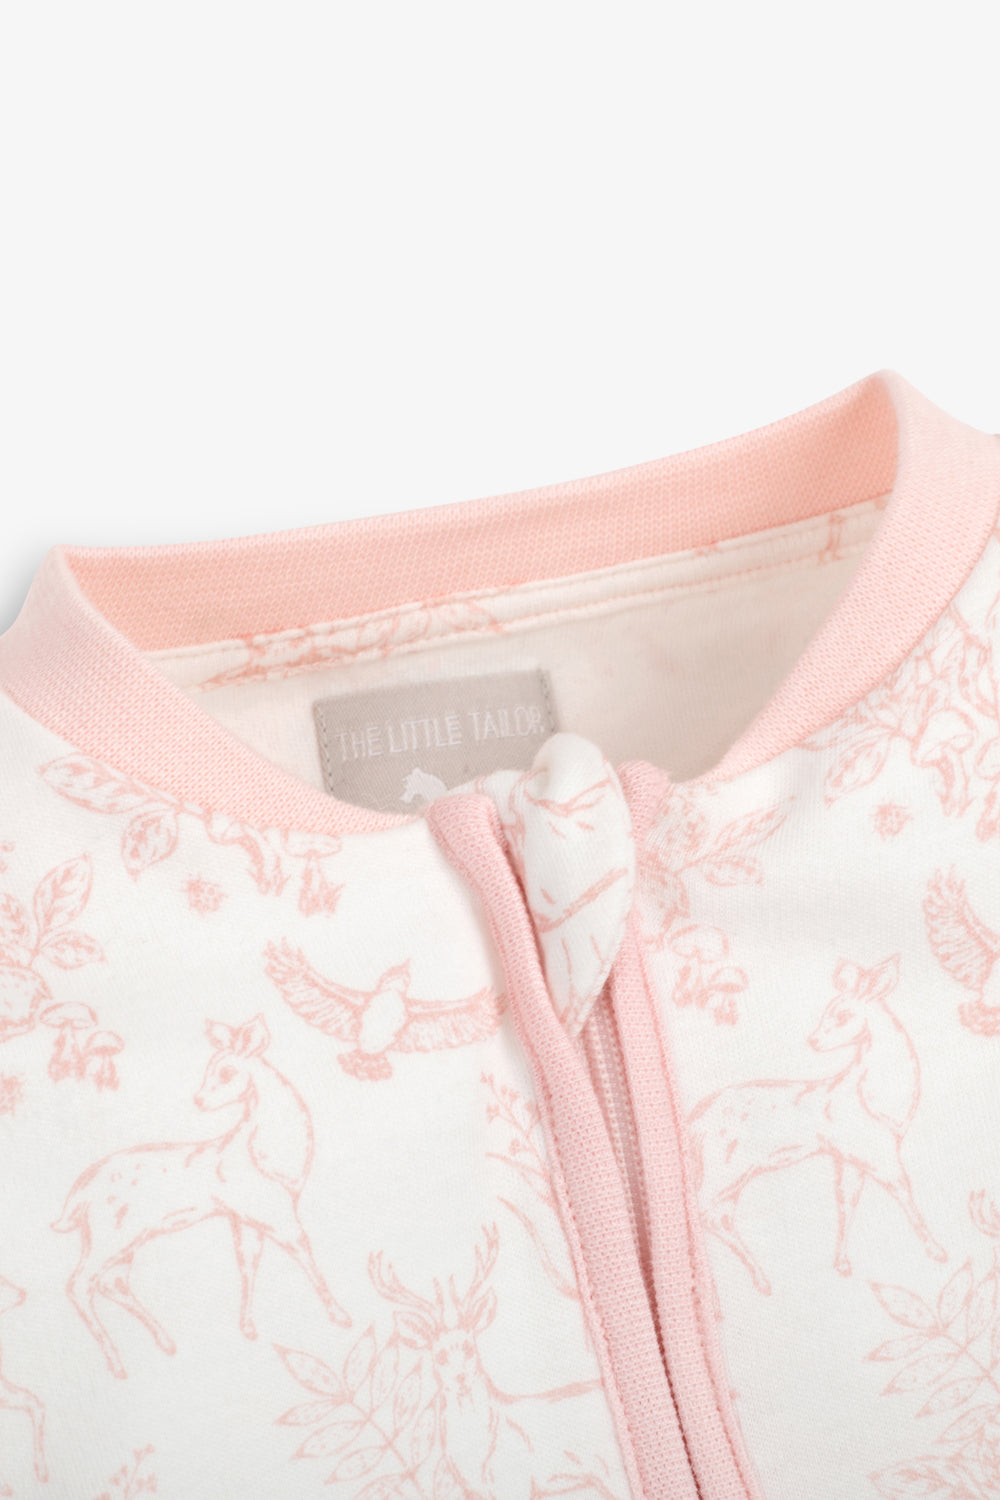 Sleepsuit and Bunny Gift Set, rose pink woodland print